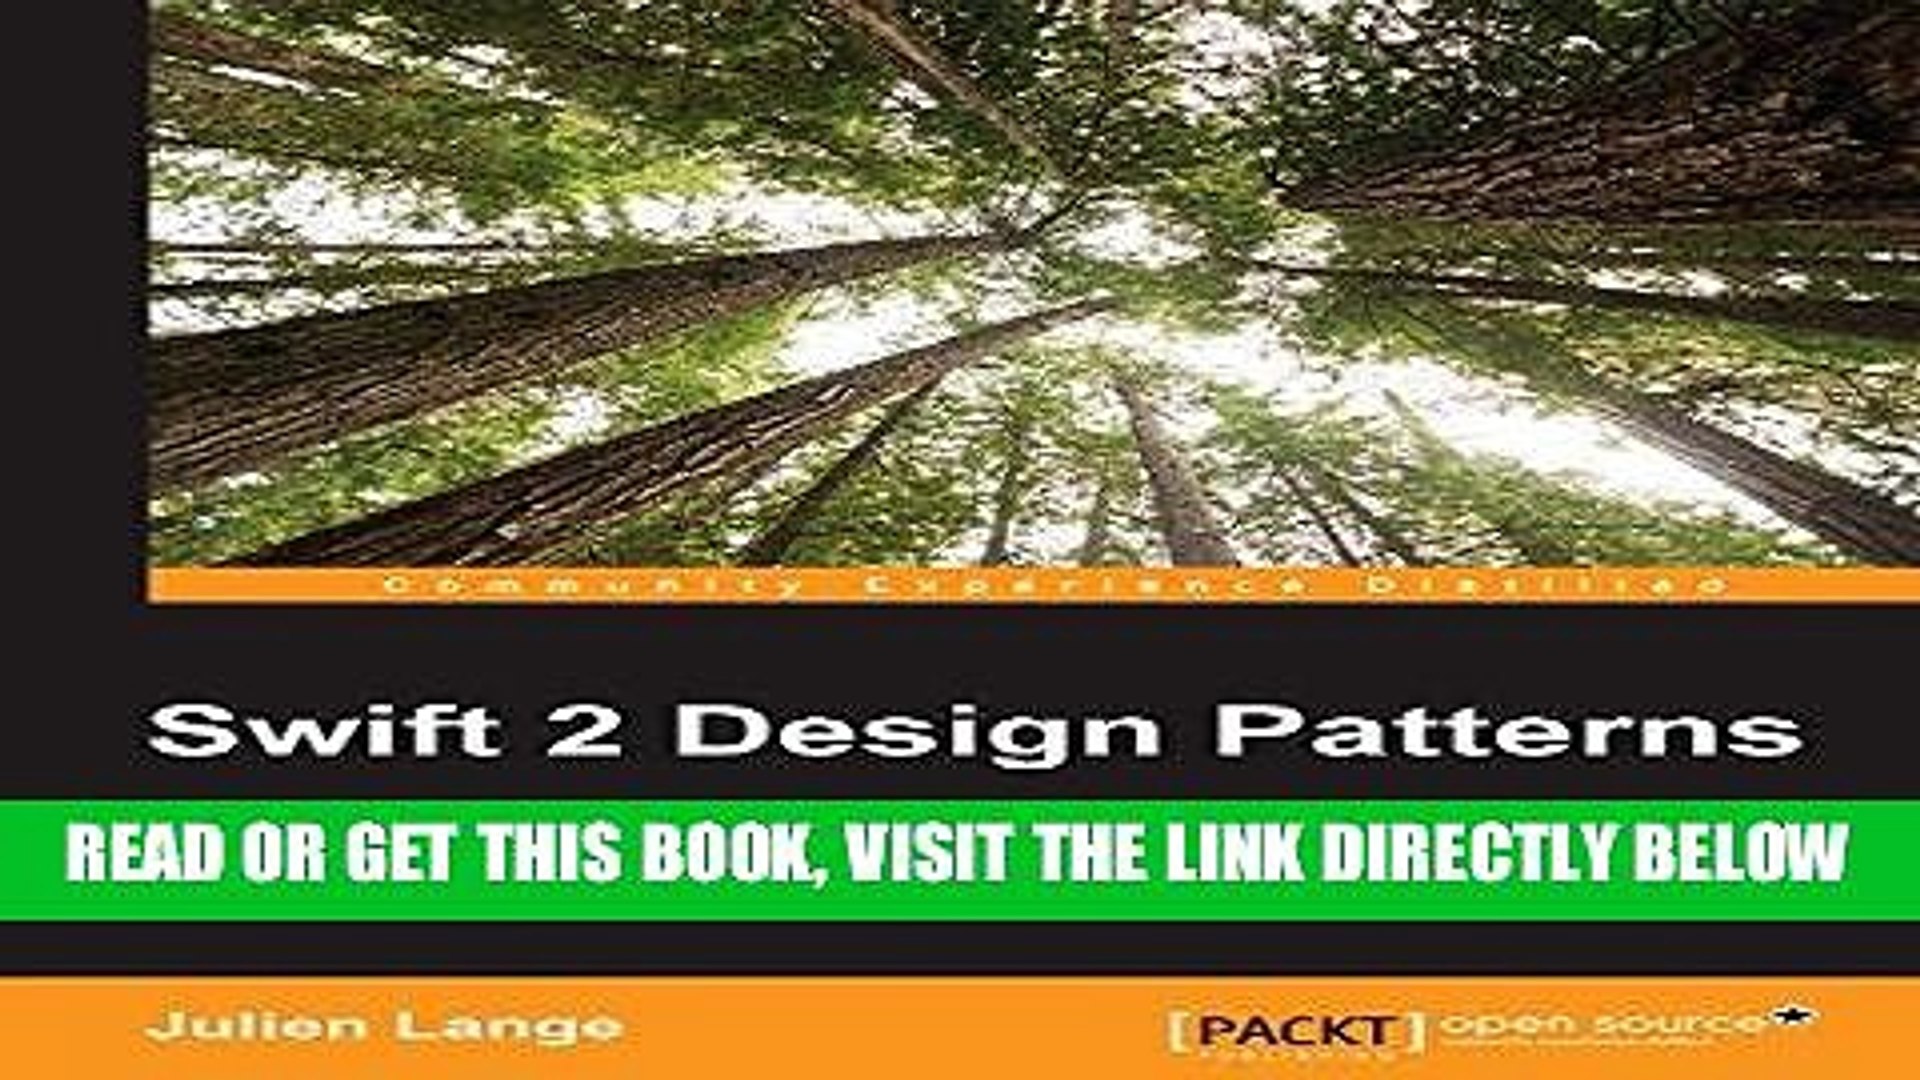 [Free Read] Swift 2 Design Patterns Full Online